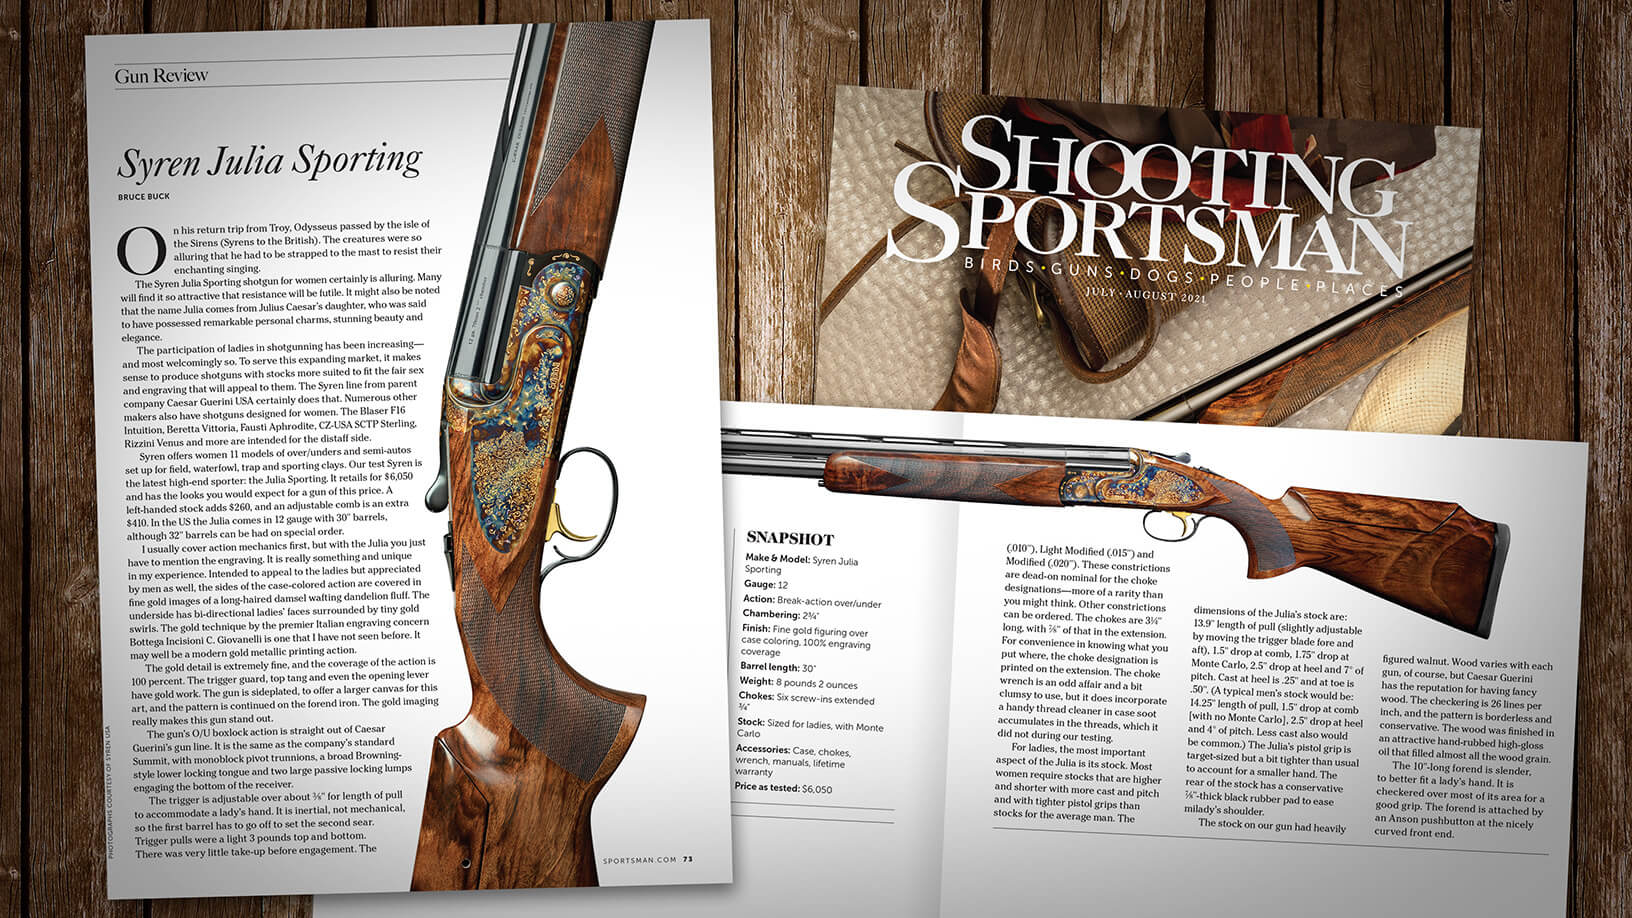 [Shooting Sportsman 06:21] Gun Review: Syren Julia Sporting by Bruce Buck